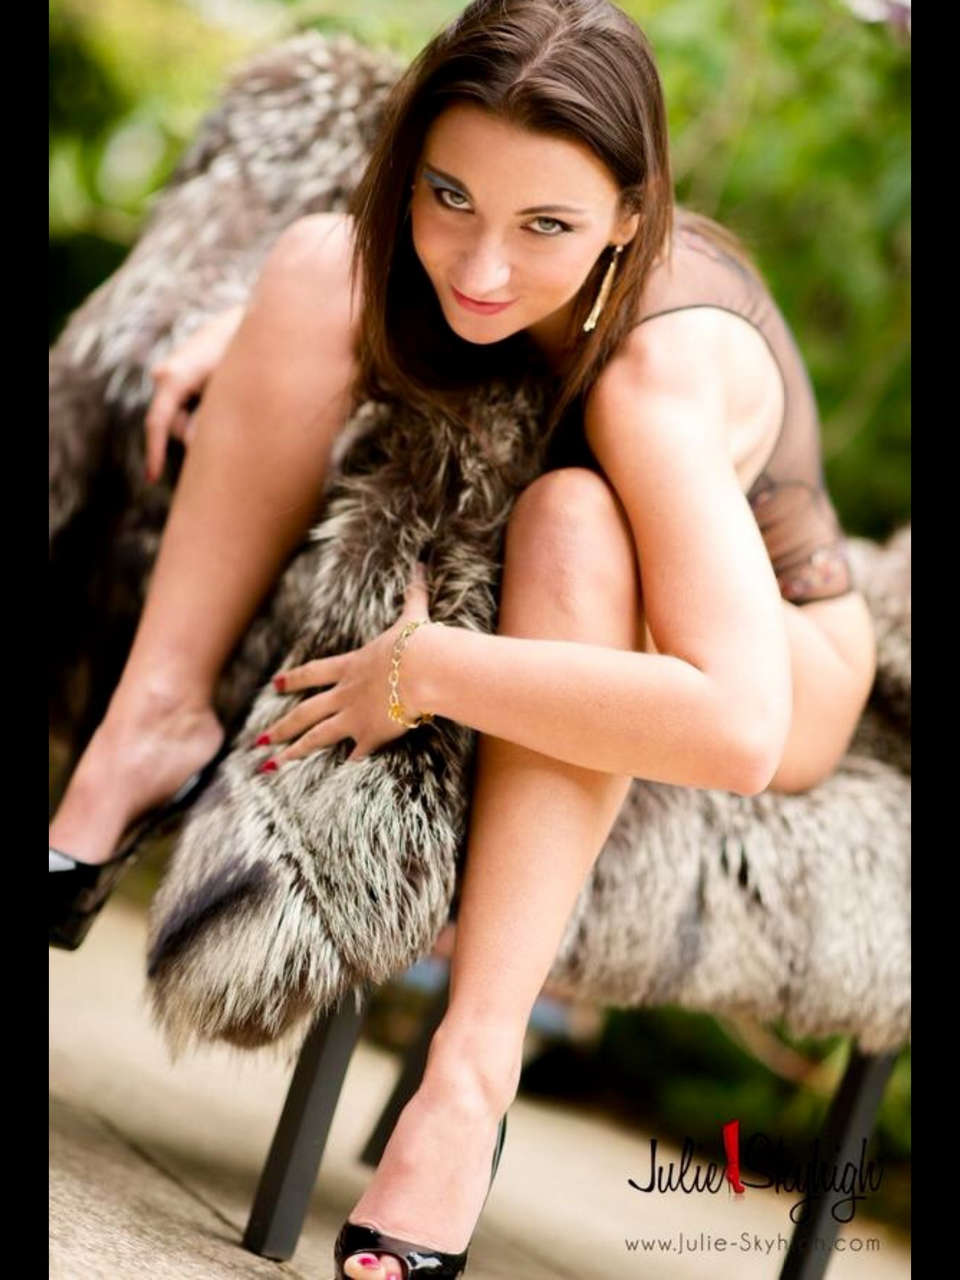 Julie skyhigh fur coat image